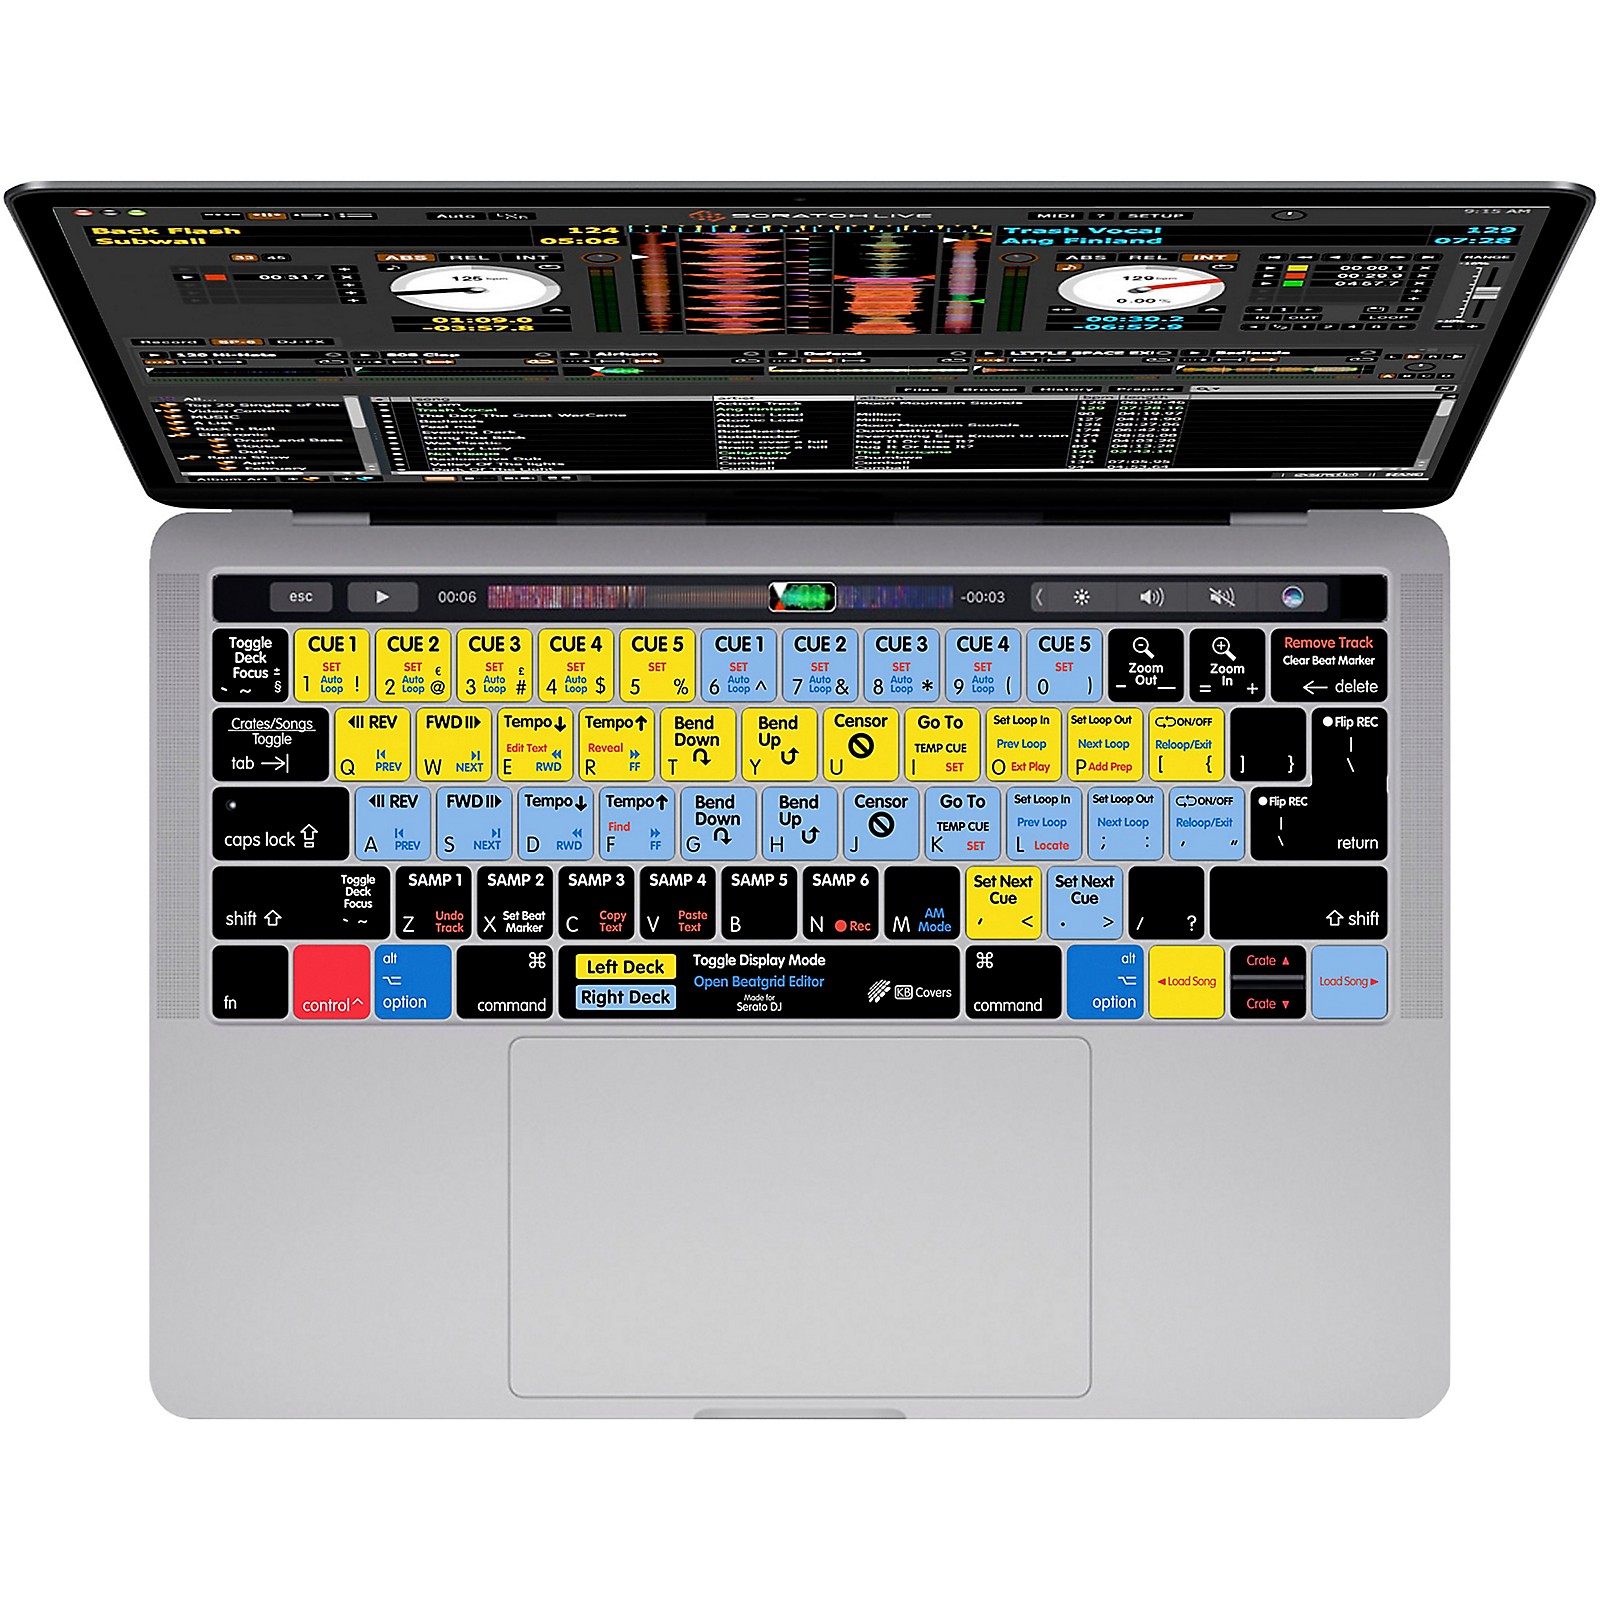 The Ultimate DJ Controller Cover 15 Fits MacBook Pro Retina 13 17 and Prev Gen Wireless Keyboard Editors Keys Serato DJ Keyboard Cover